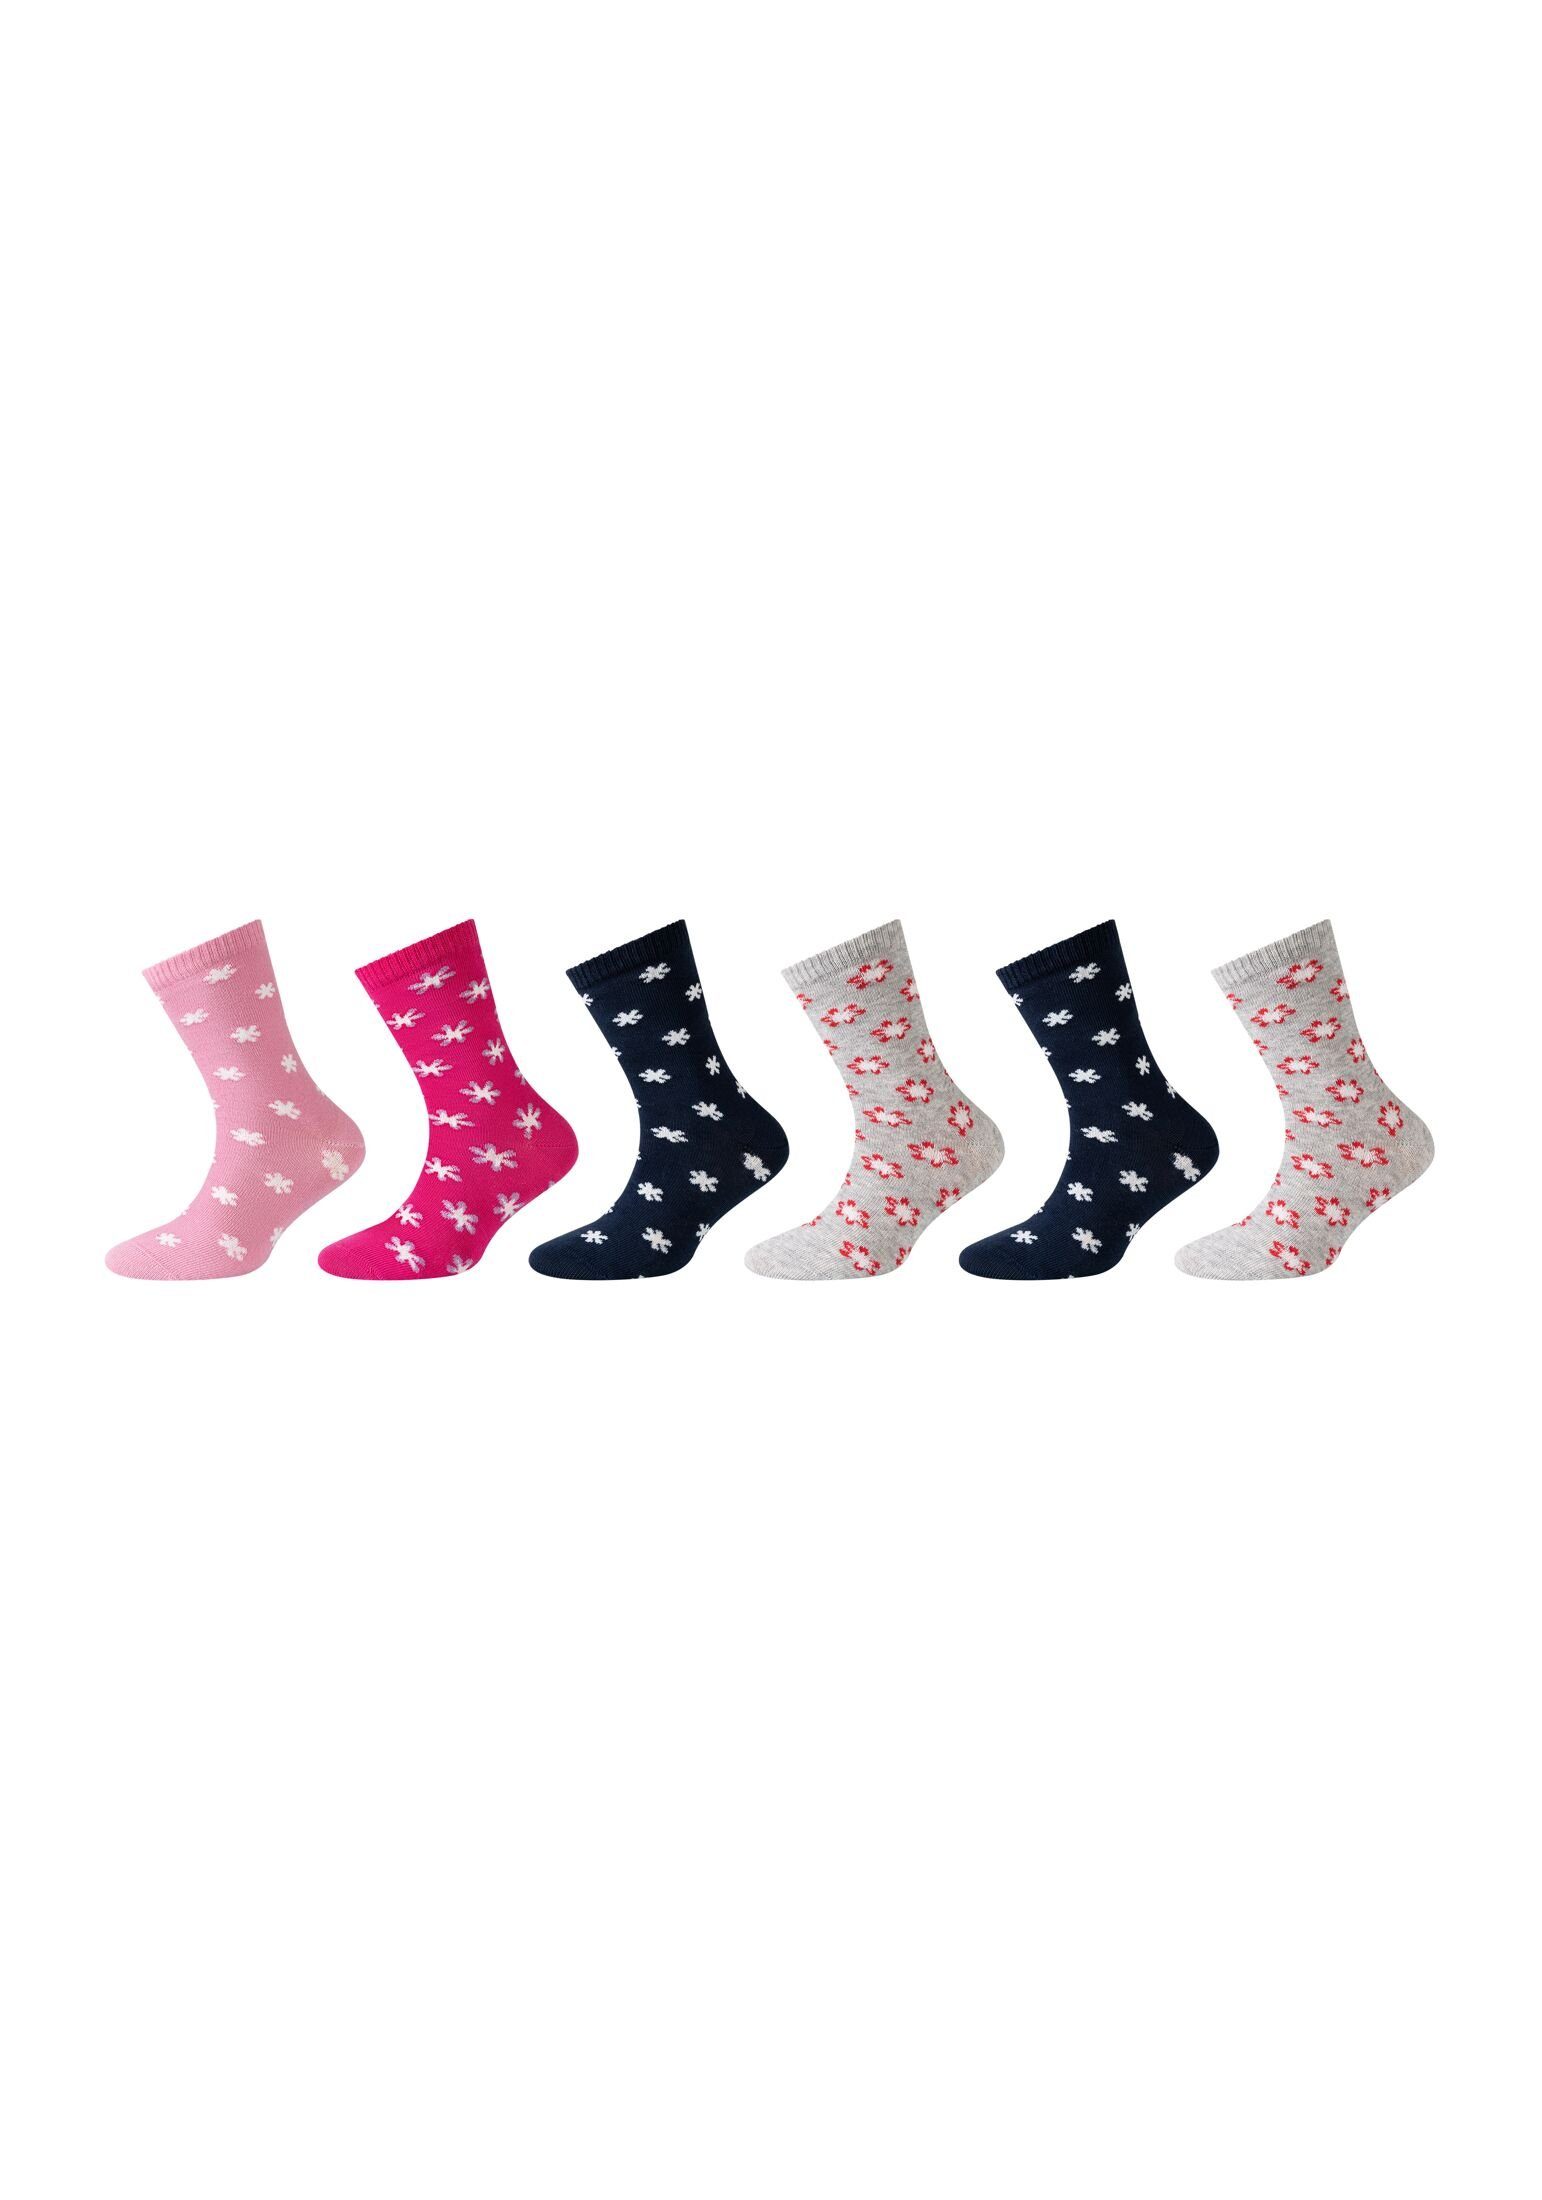 Camano Socken Socken 6er Pack paradise pink